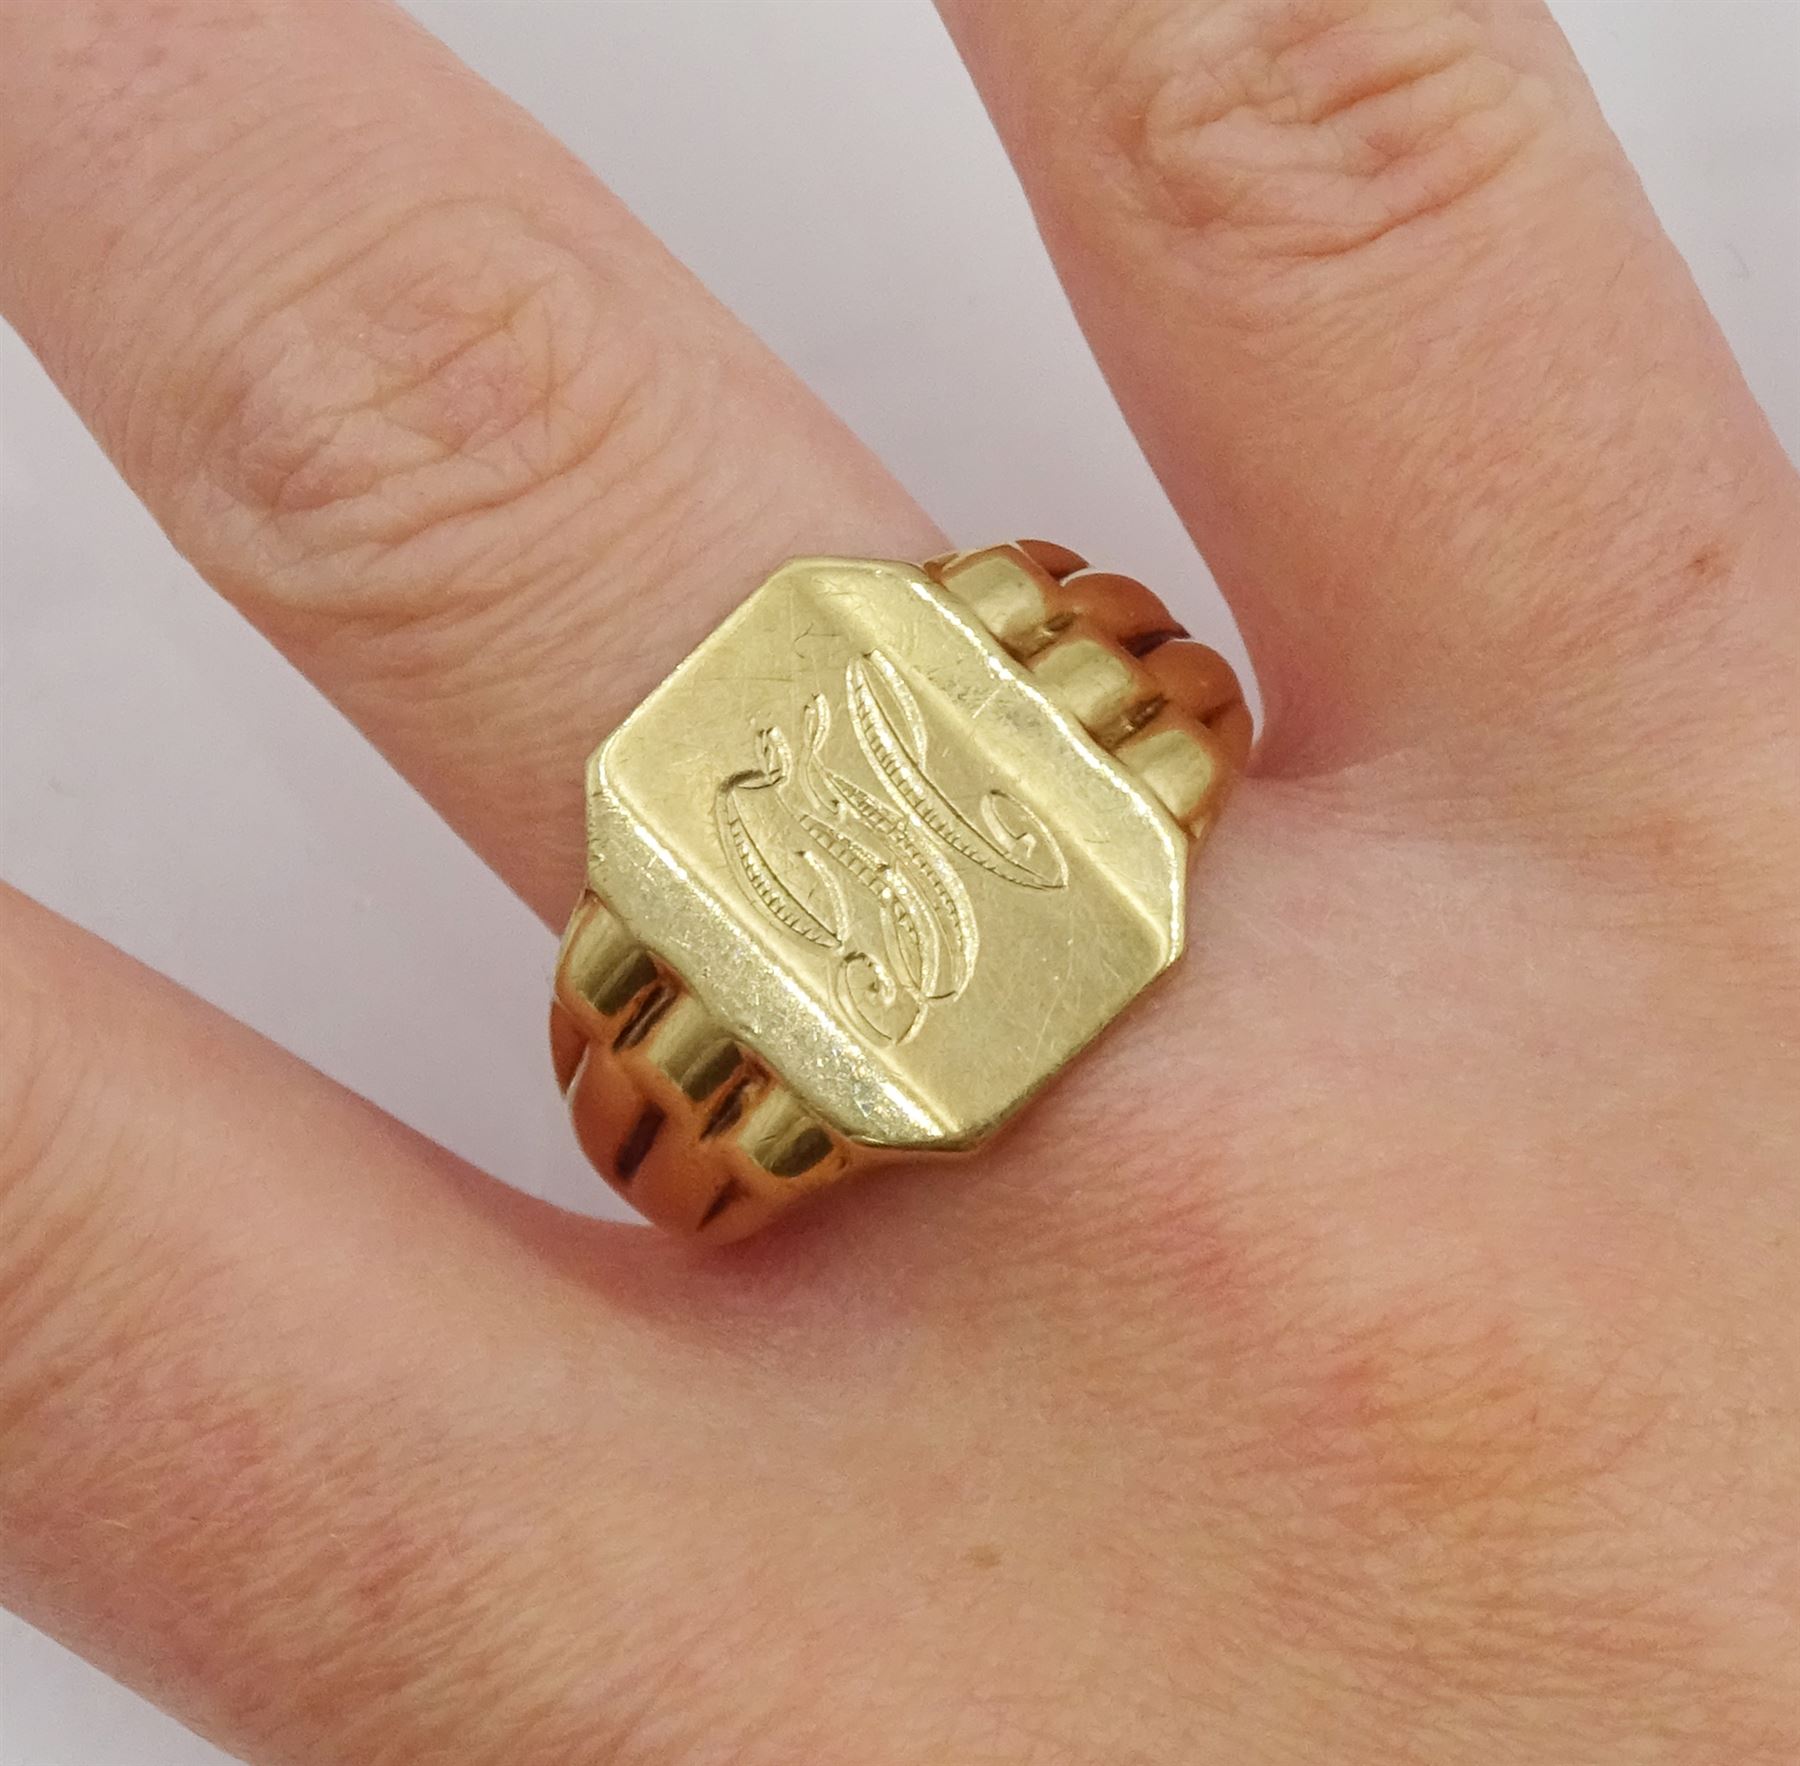 9ct gold signet ring - Image 2 of 4